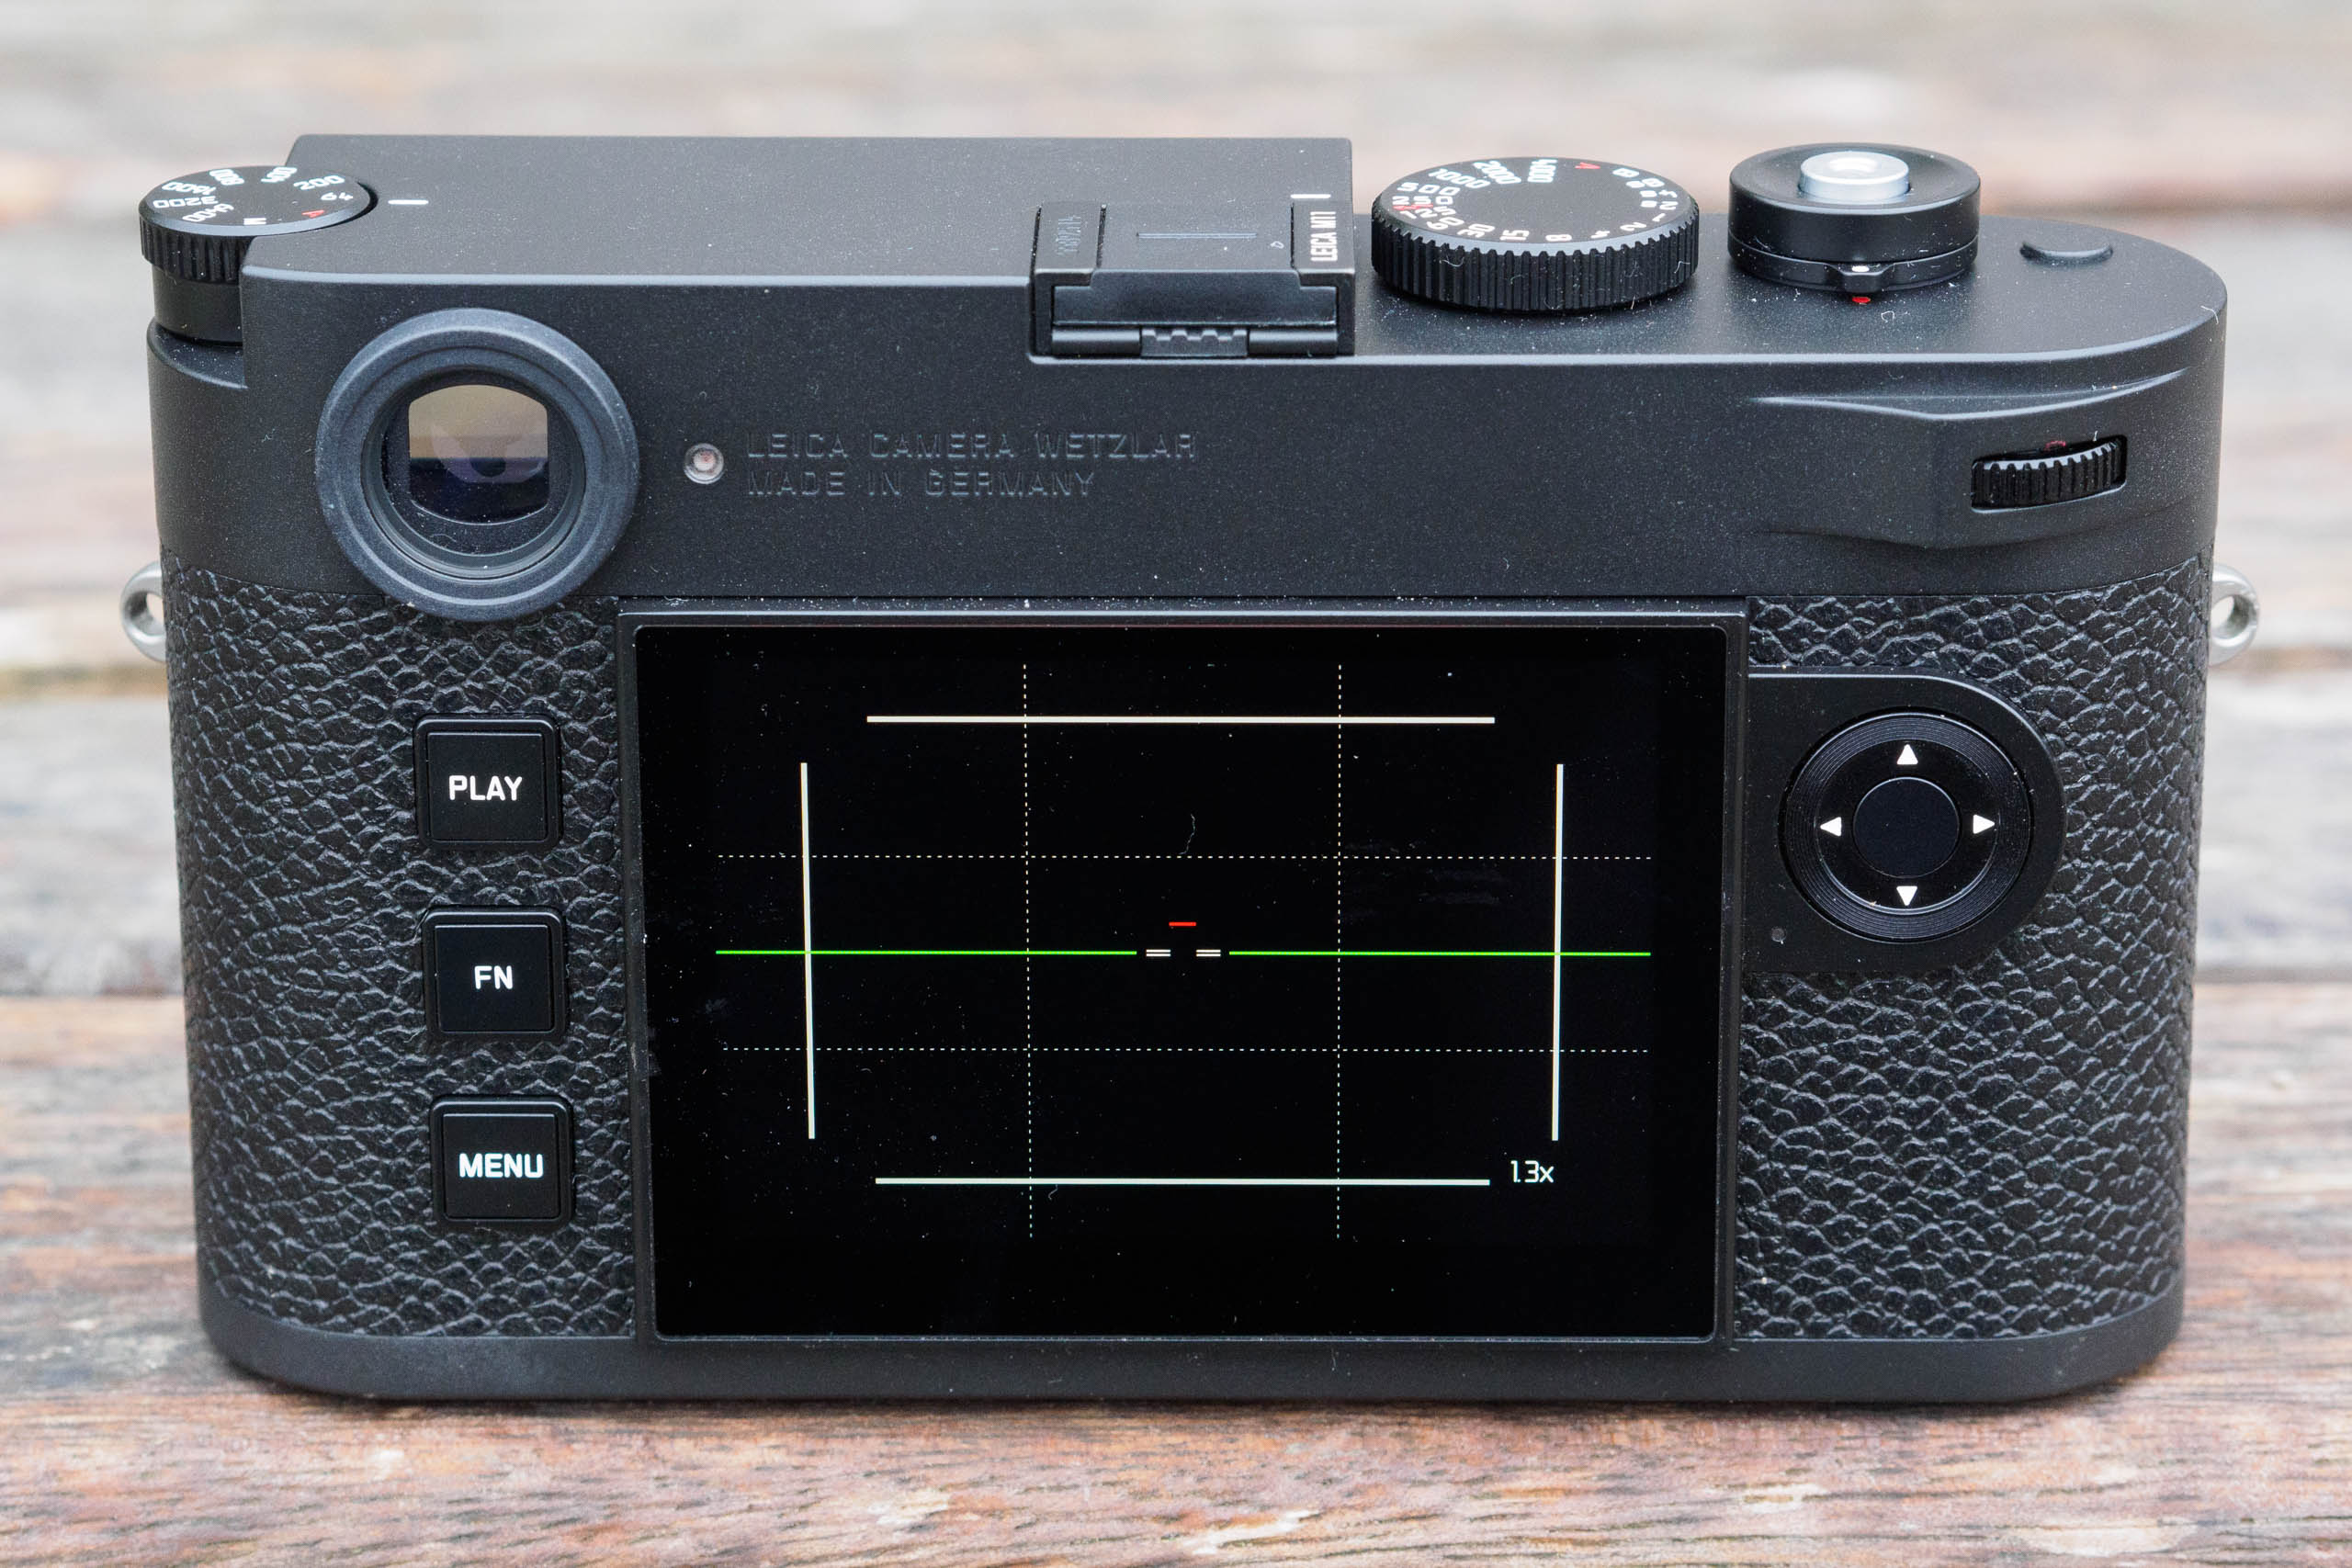 Leica M11 crop mode framelines